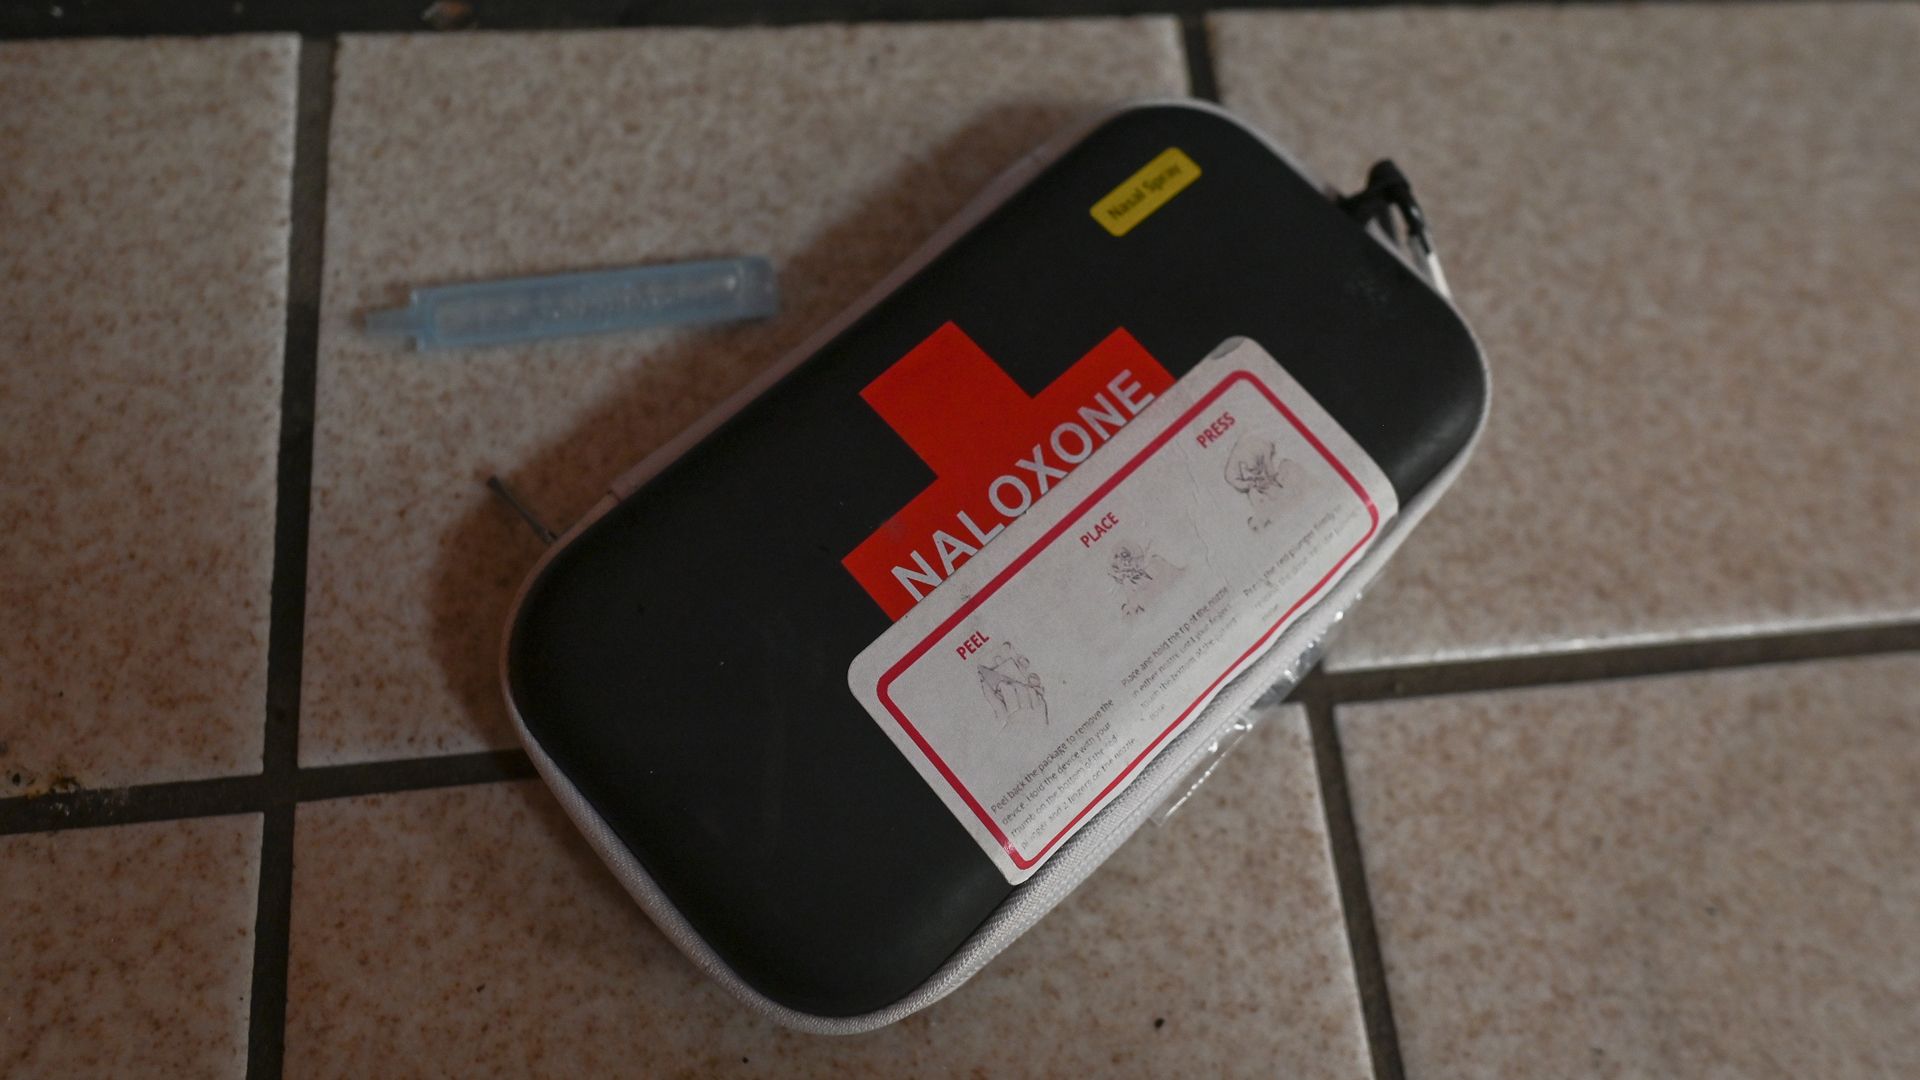 A box containing naloxone